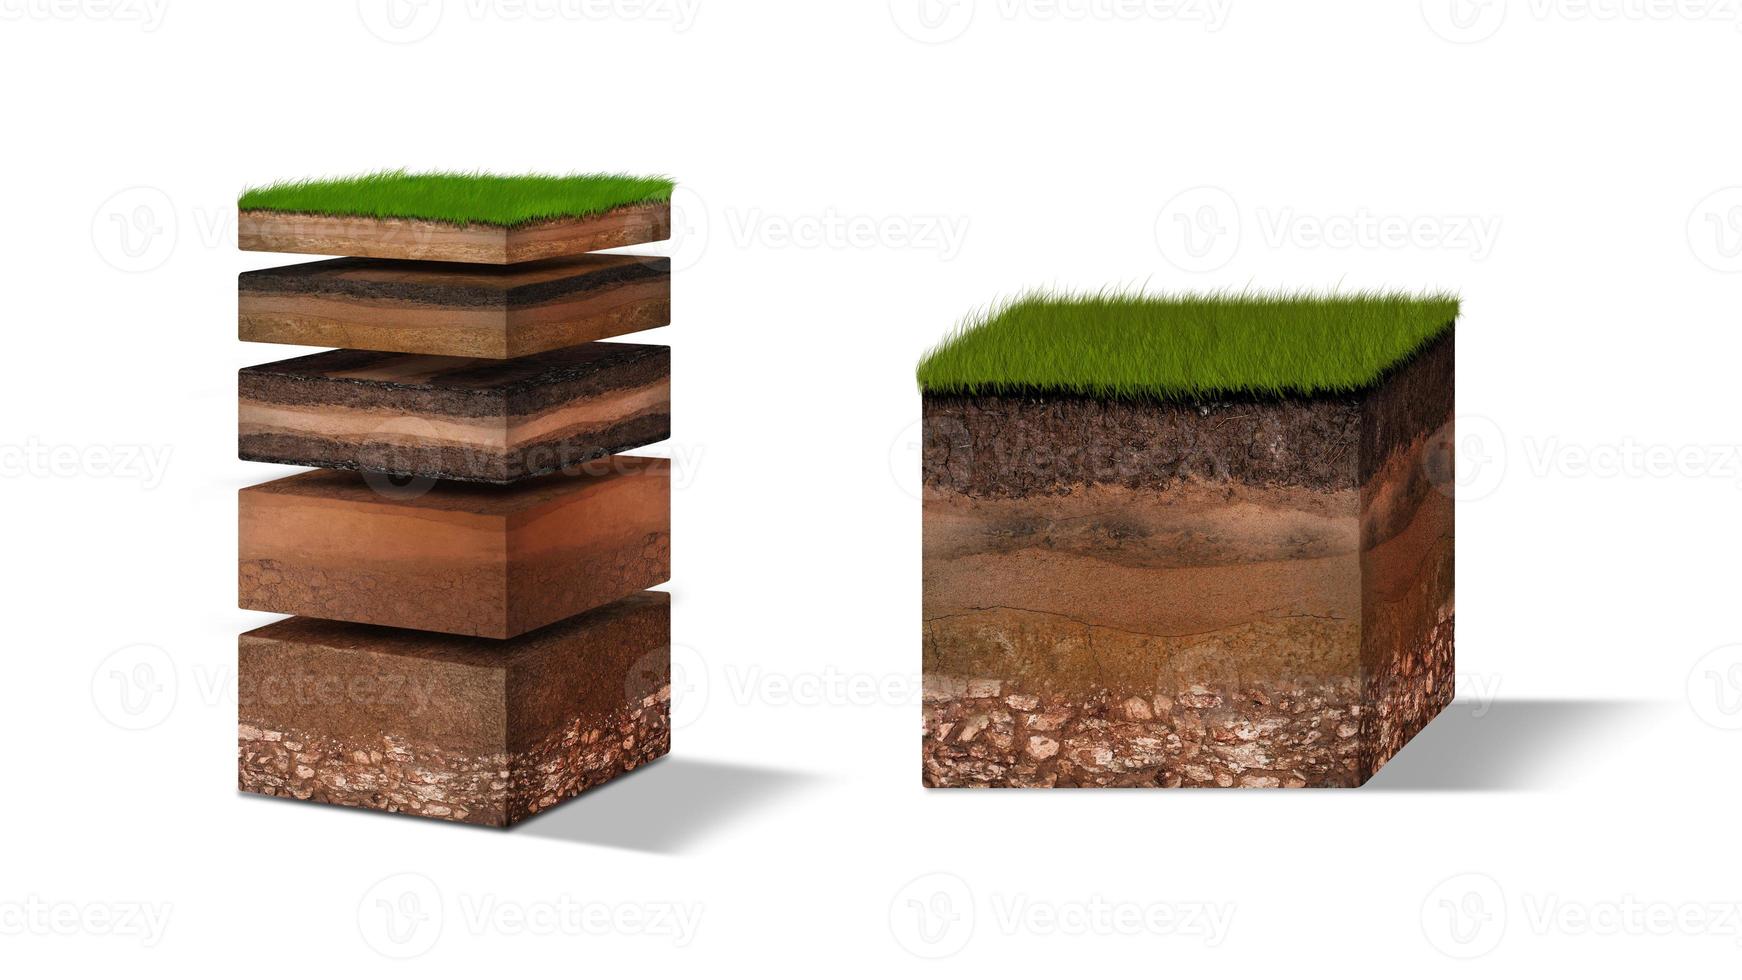 isometrisk jord skikten diagram, korsa sektion av grön gräs och underjordisk jord skikten under, skikt av organisk, mineraler, sand, lera, isometrisk jord skikten isolerat på vit foto